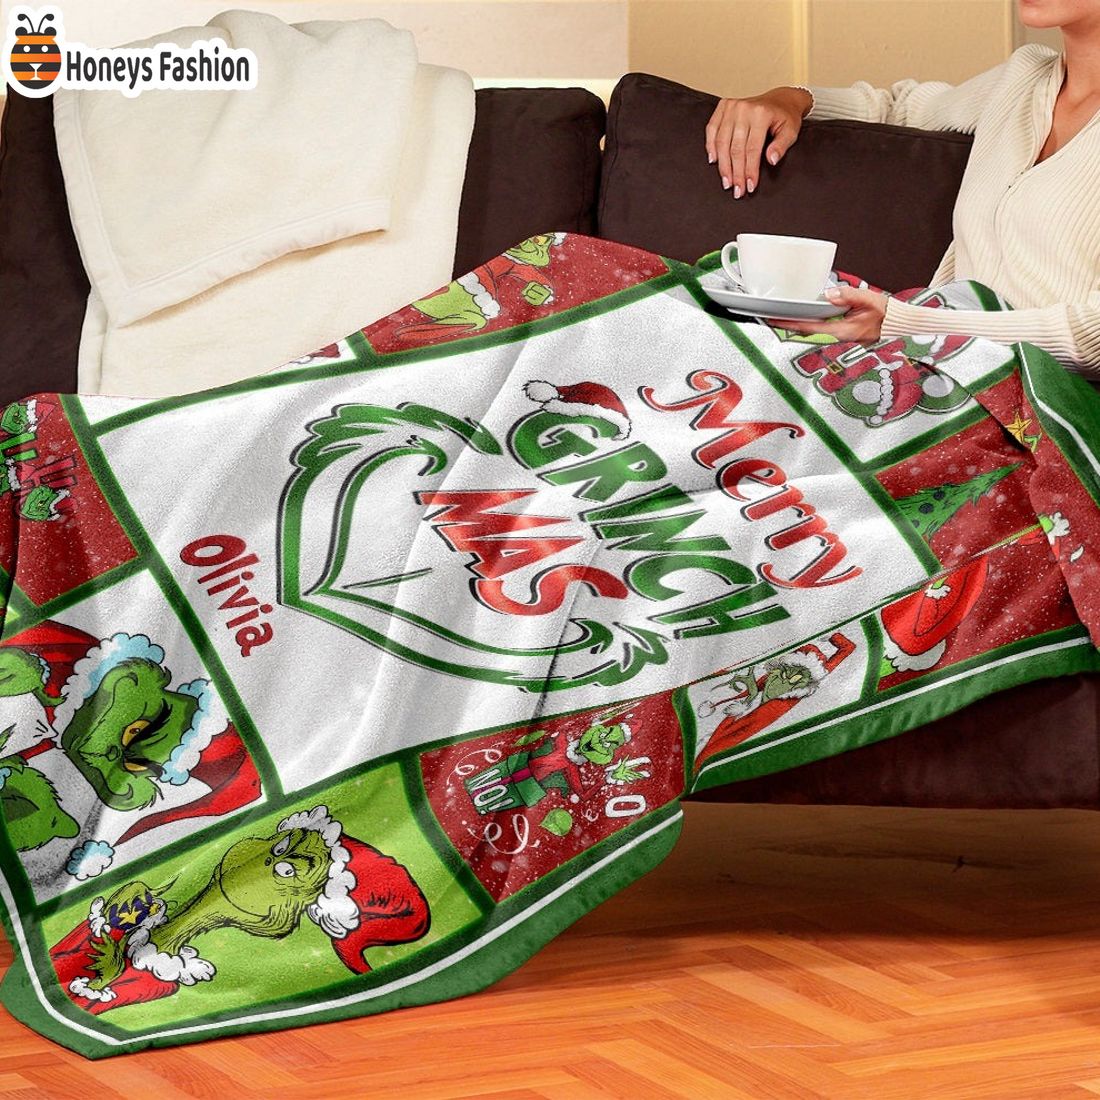 Merry Grinch Mas Custom Name Blanket